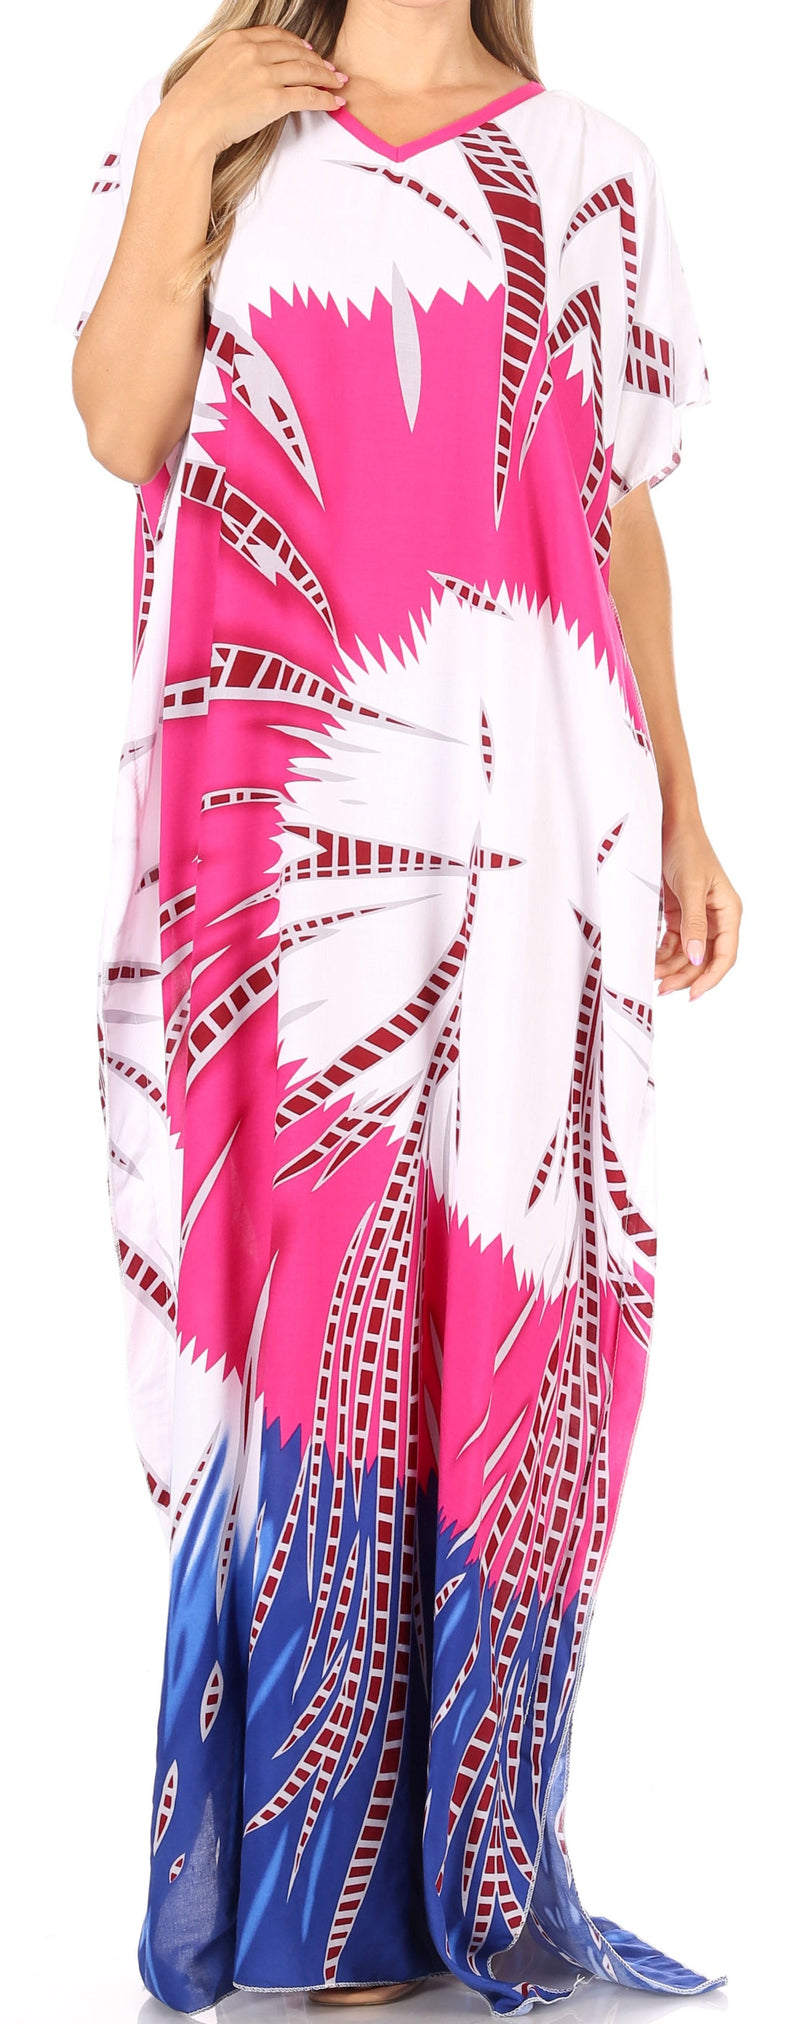 Sakkas Aggy Womens Dashiki African Print Caftan Dress Maxi Boho Hippie Colorful